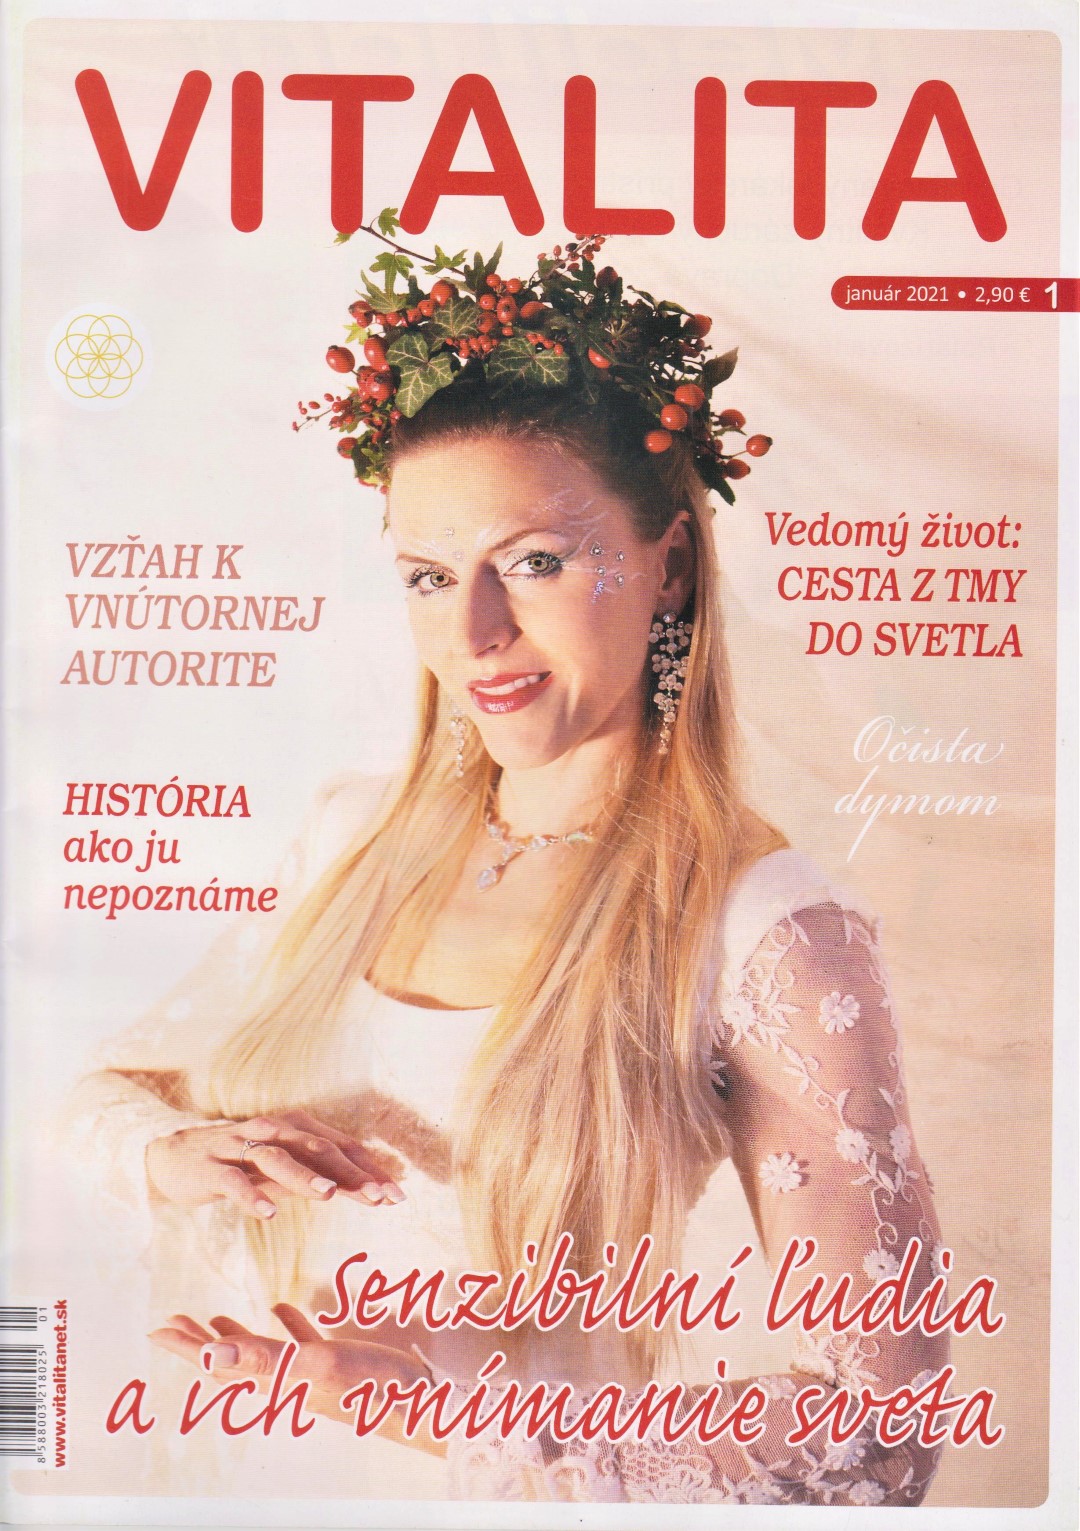 Titulka a interview pre časopis Vitalita 1/2021